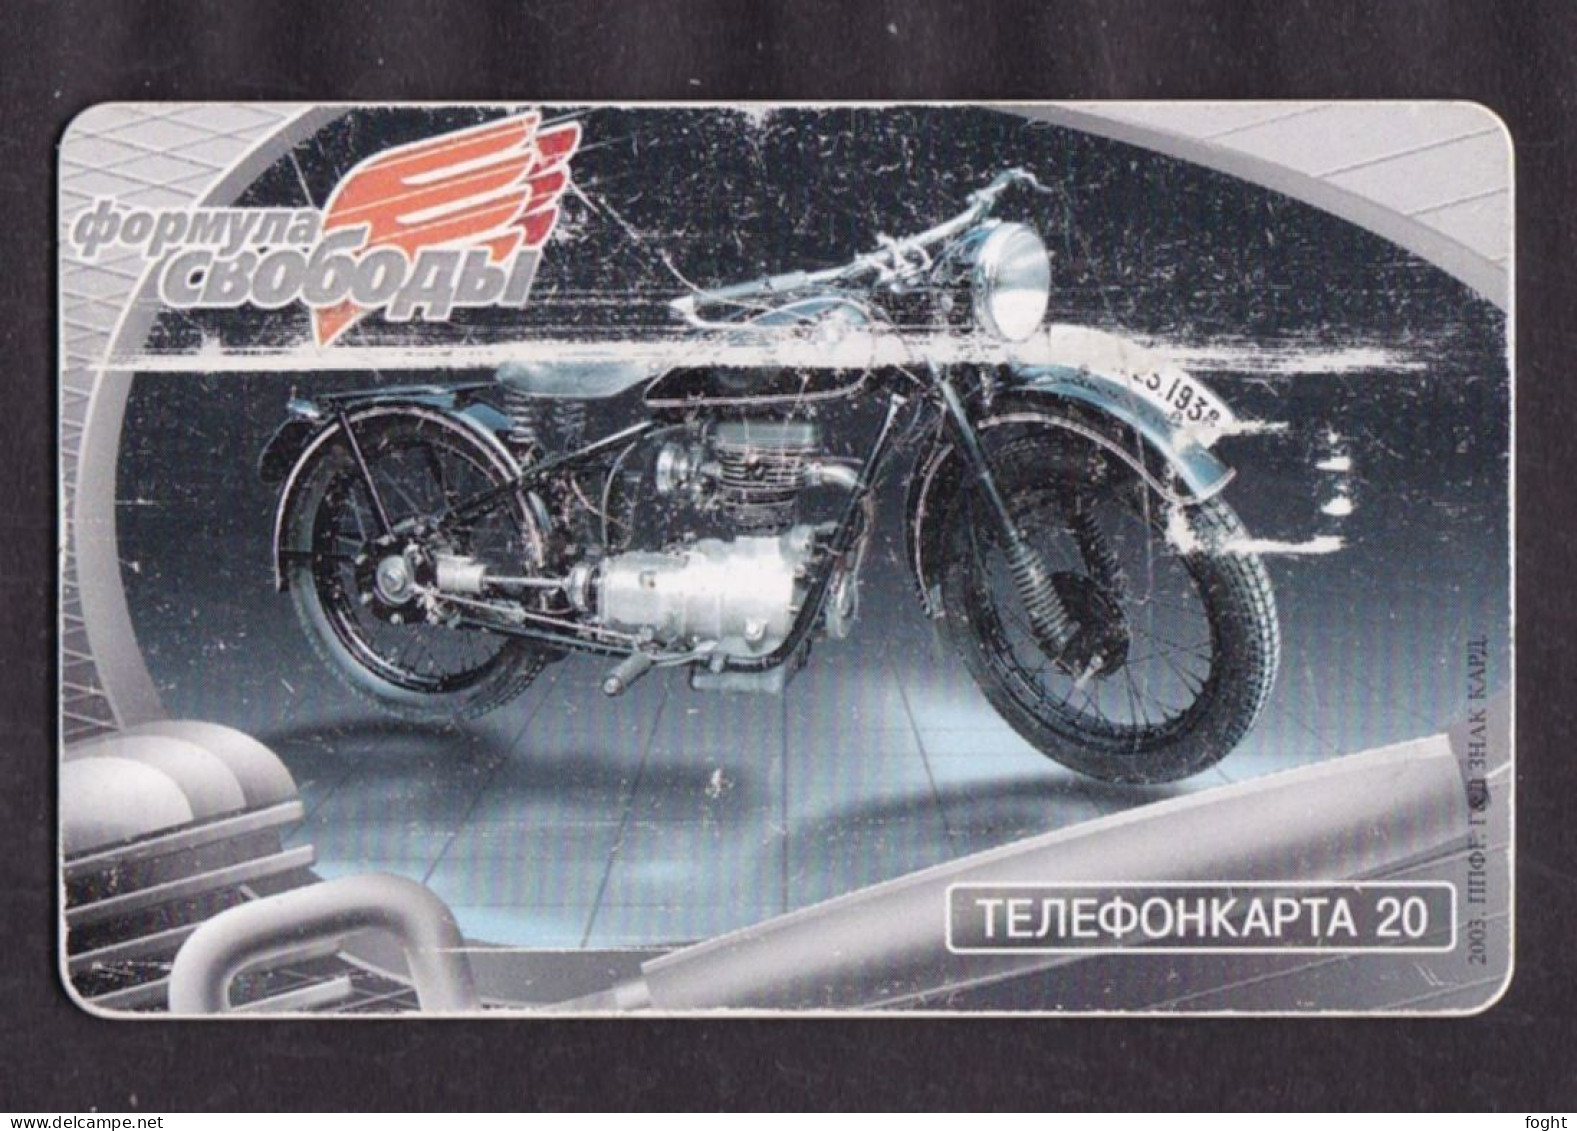 2003 Russia.Phonecard › Formula Of Freedom. 1938g.  ,20 Units,Col:RU-MG-TS-0397 - Russie